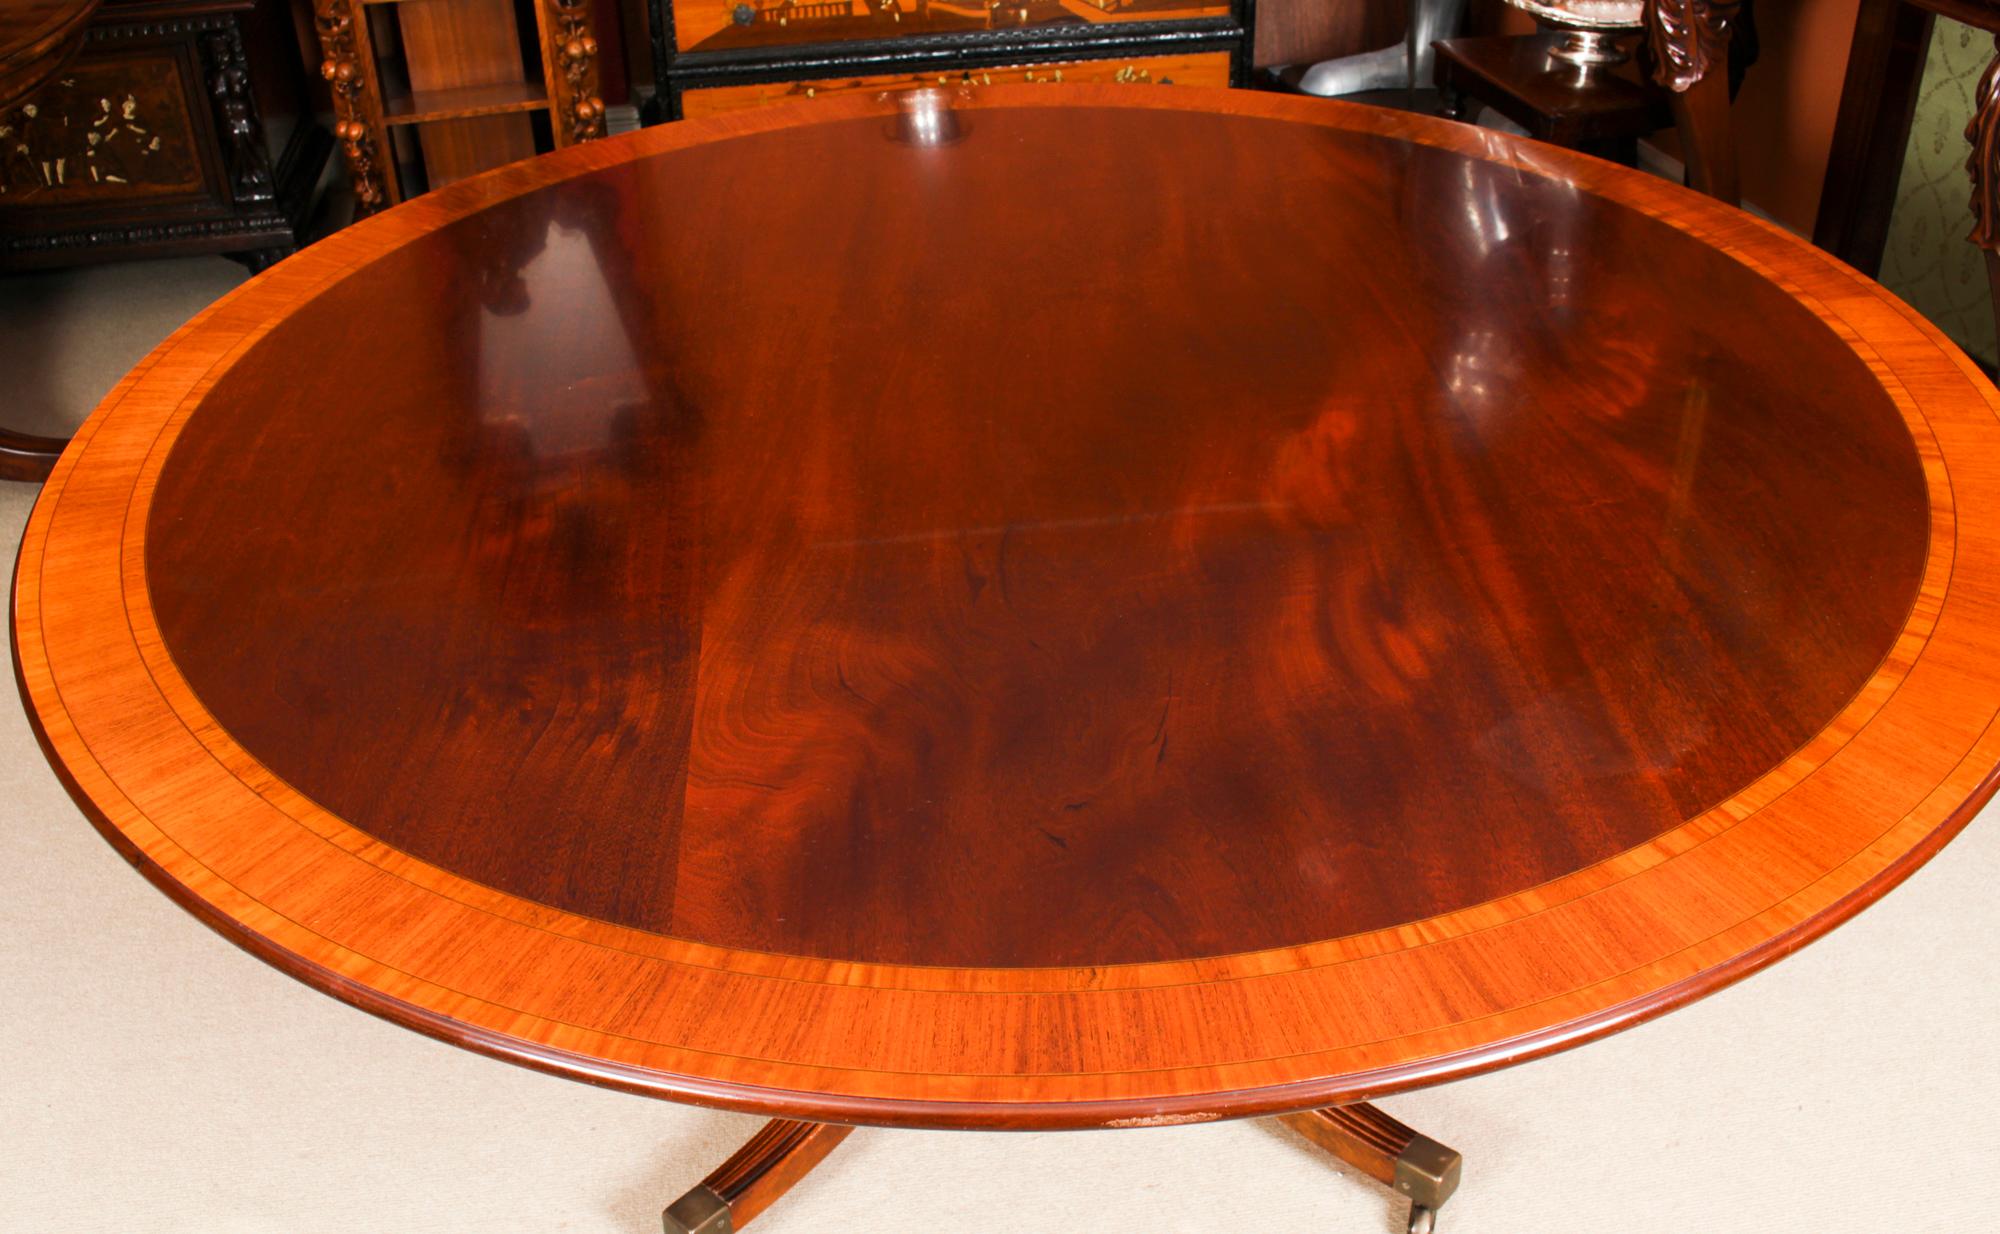 Regency Revival Vintage Circular Dining Table & 6 Chairs William Tillman, 20th Century